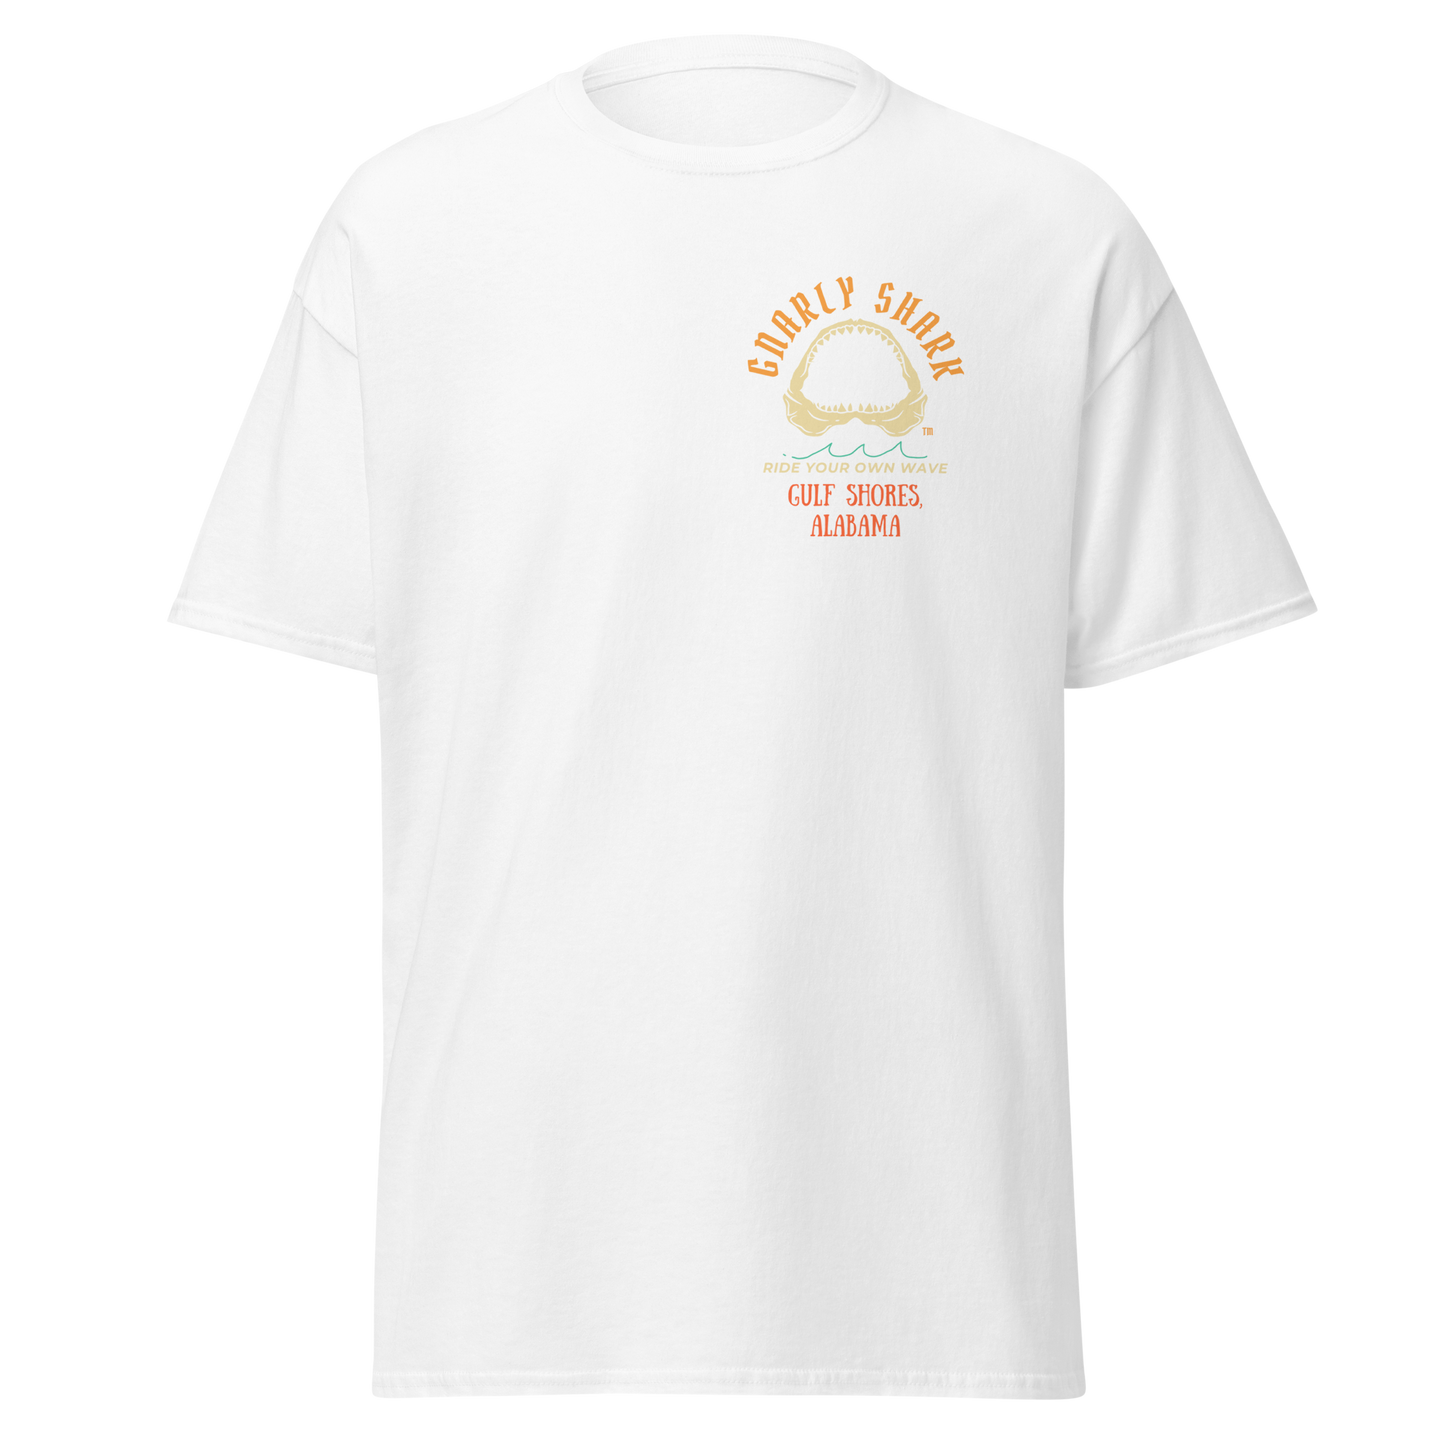 Gnarly Shark Gulf Shores Alabama T- shirt - Front / Back - Gildan classic 5000